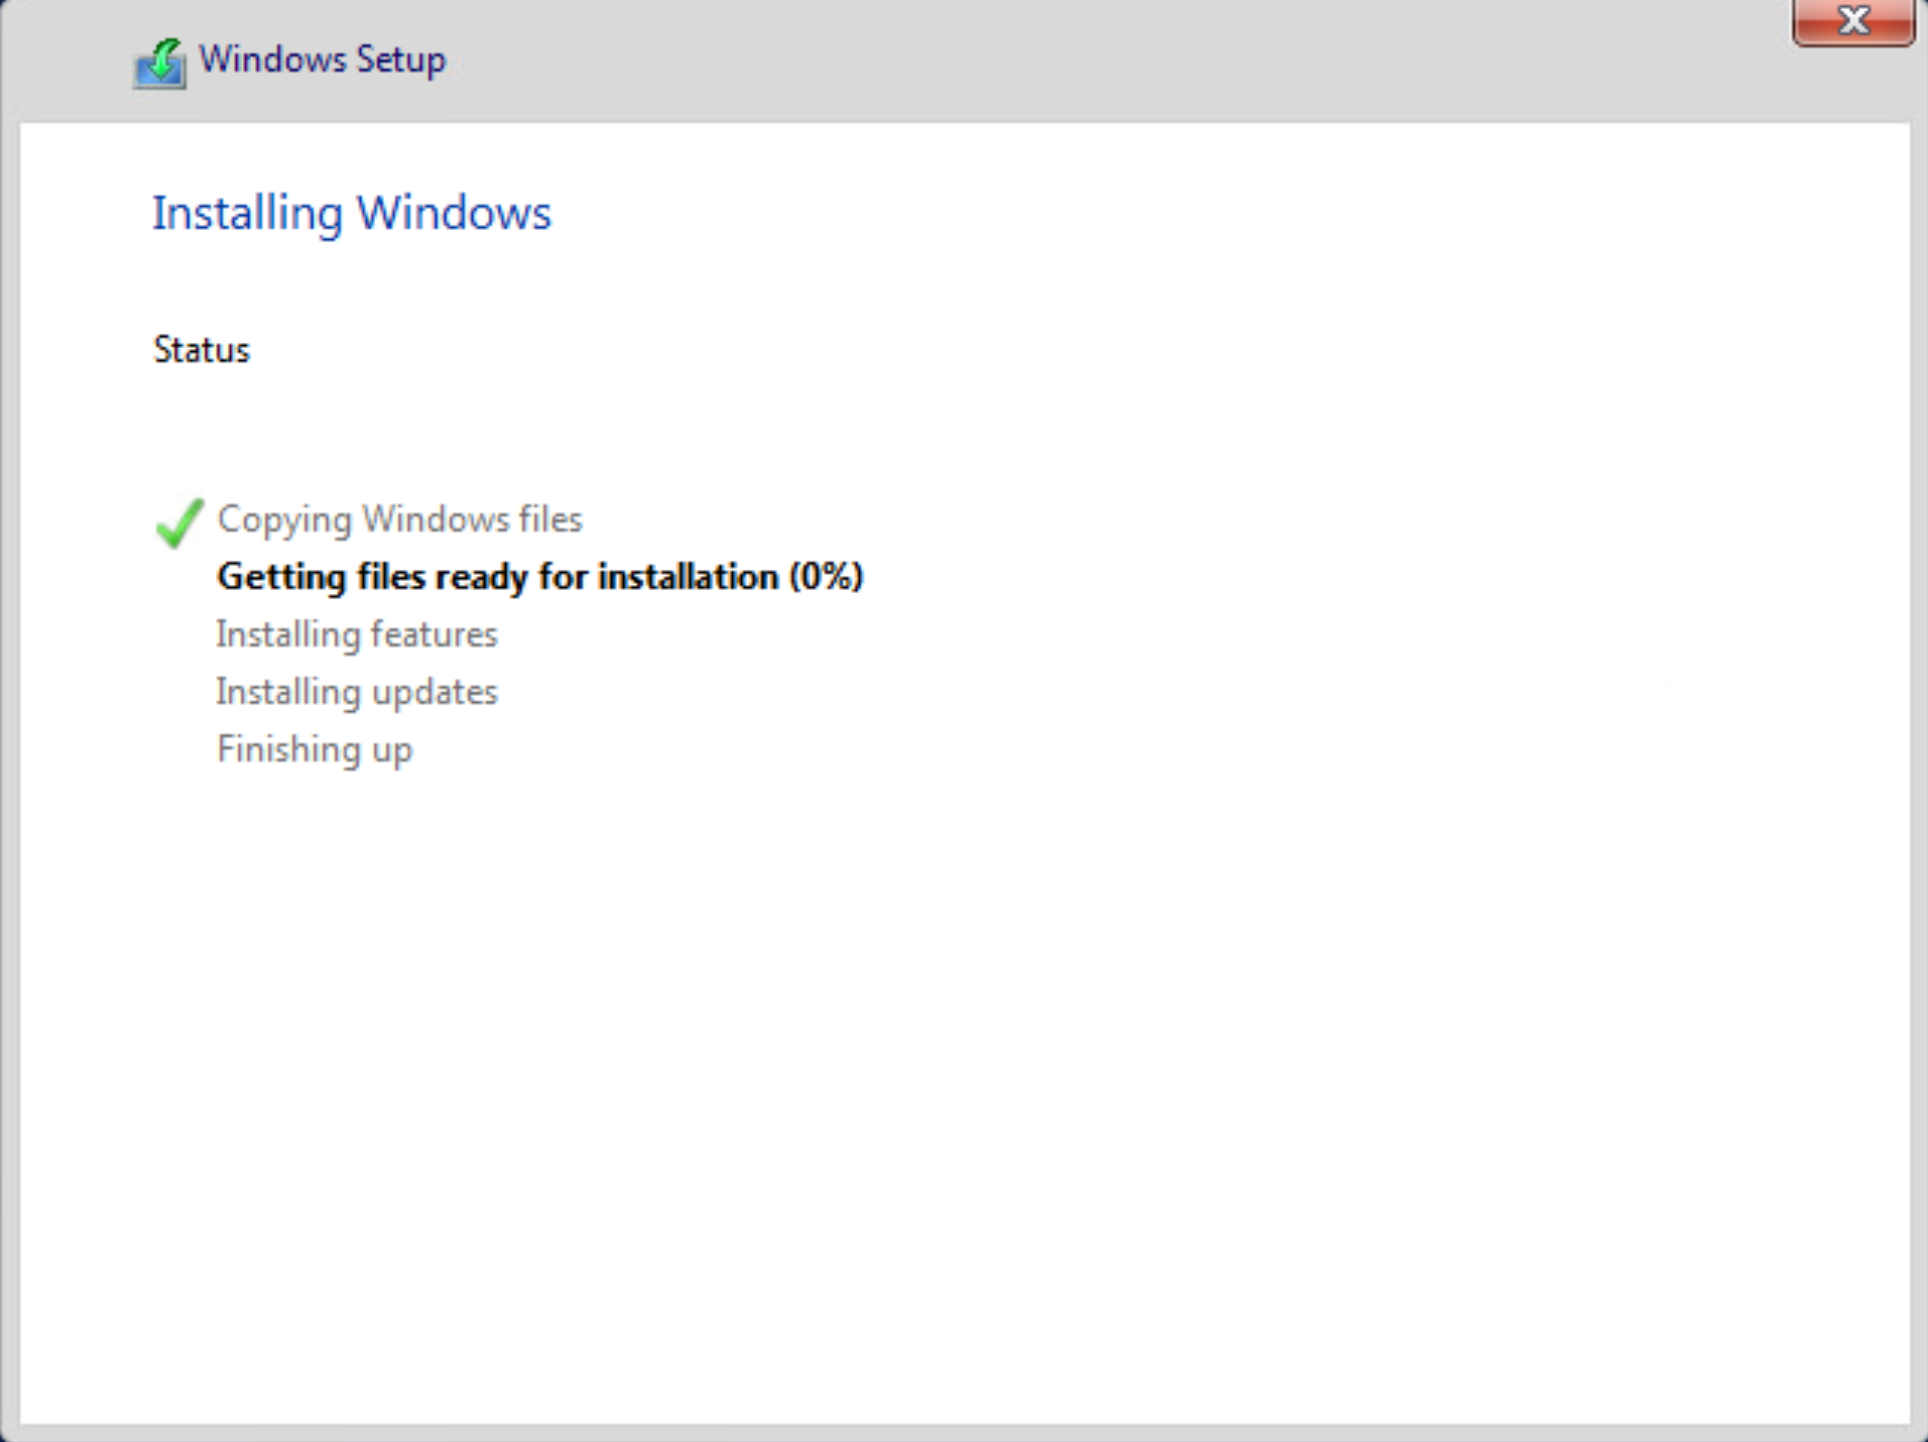 Screenshot of Windows Setup window showing the installation status.